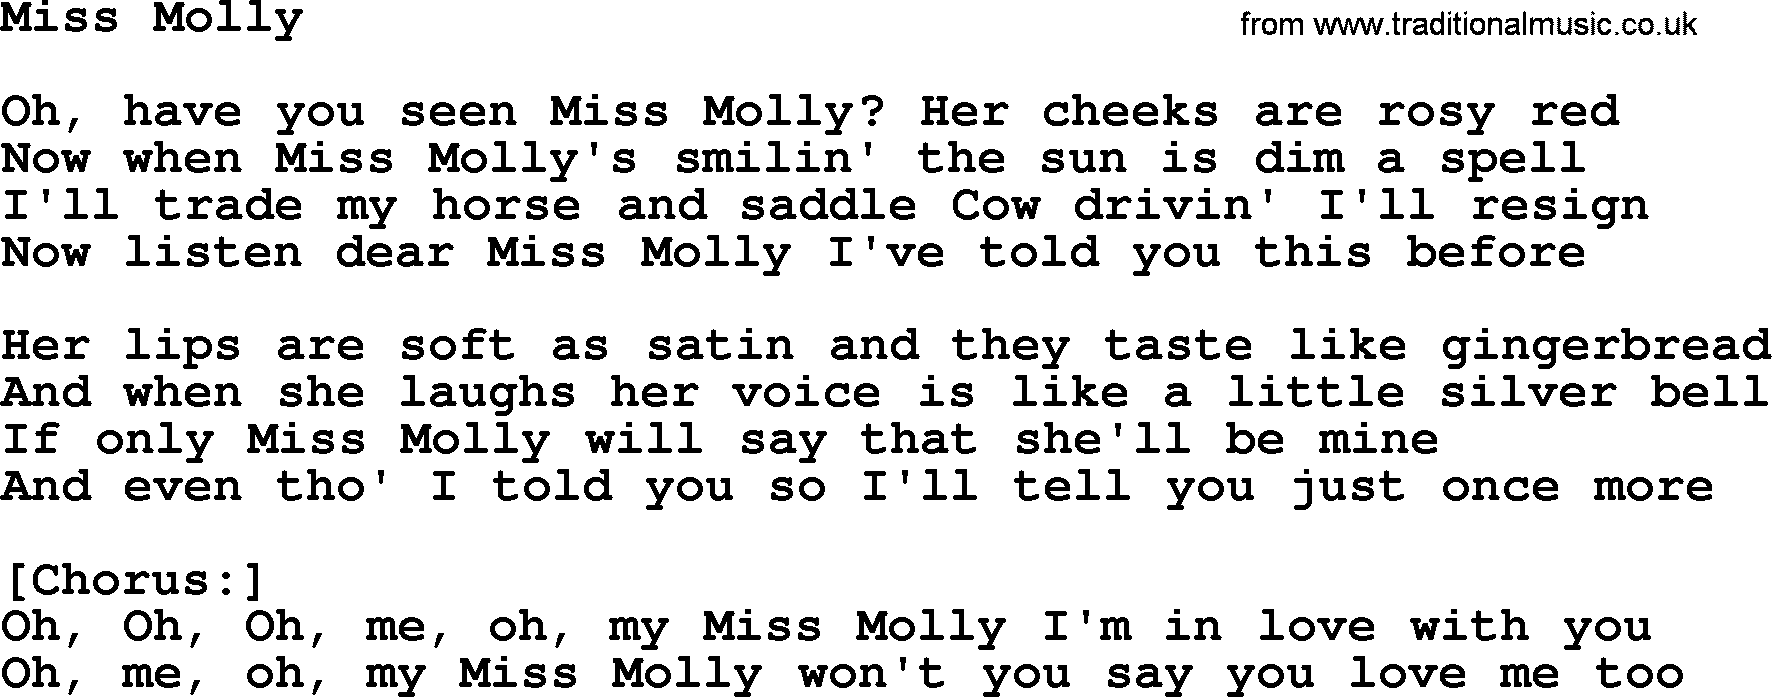 Willie Nelson song: Miss Molly lyrics